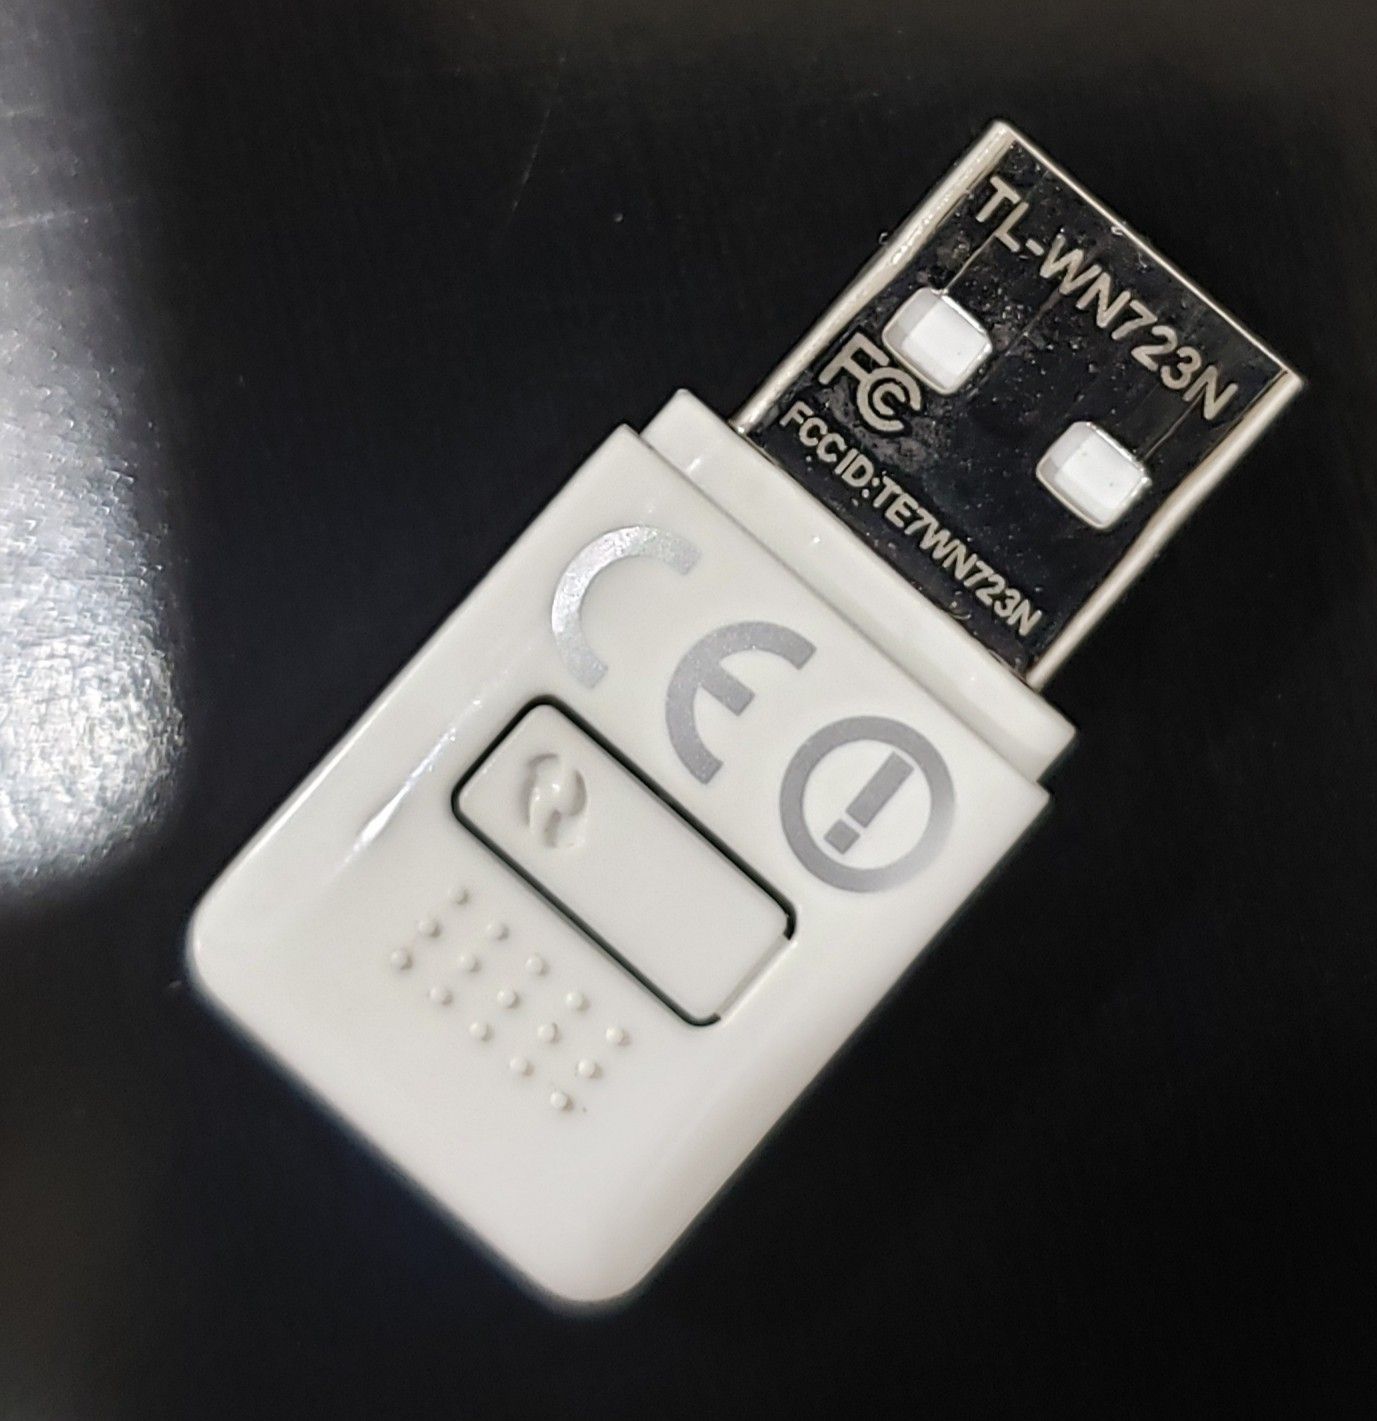 TP-LINK's Mini Wireless N USB Adapter WiFi adapter